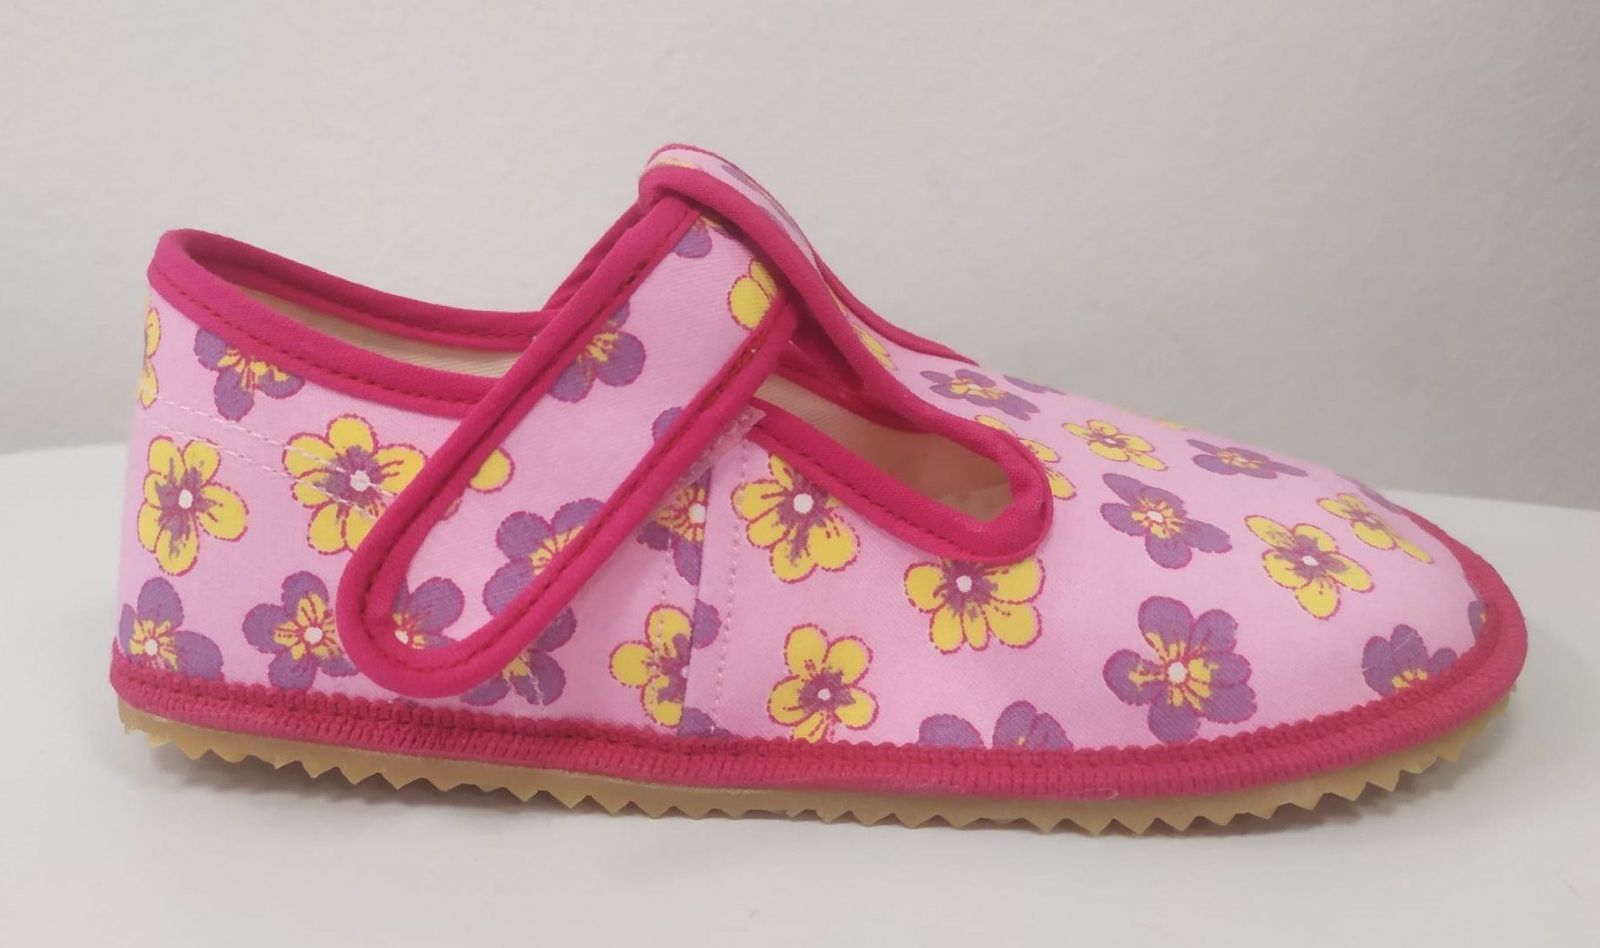 Beda barefoot - papučky suchý zips ružové - kvietky